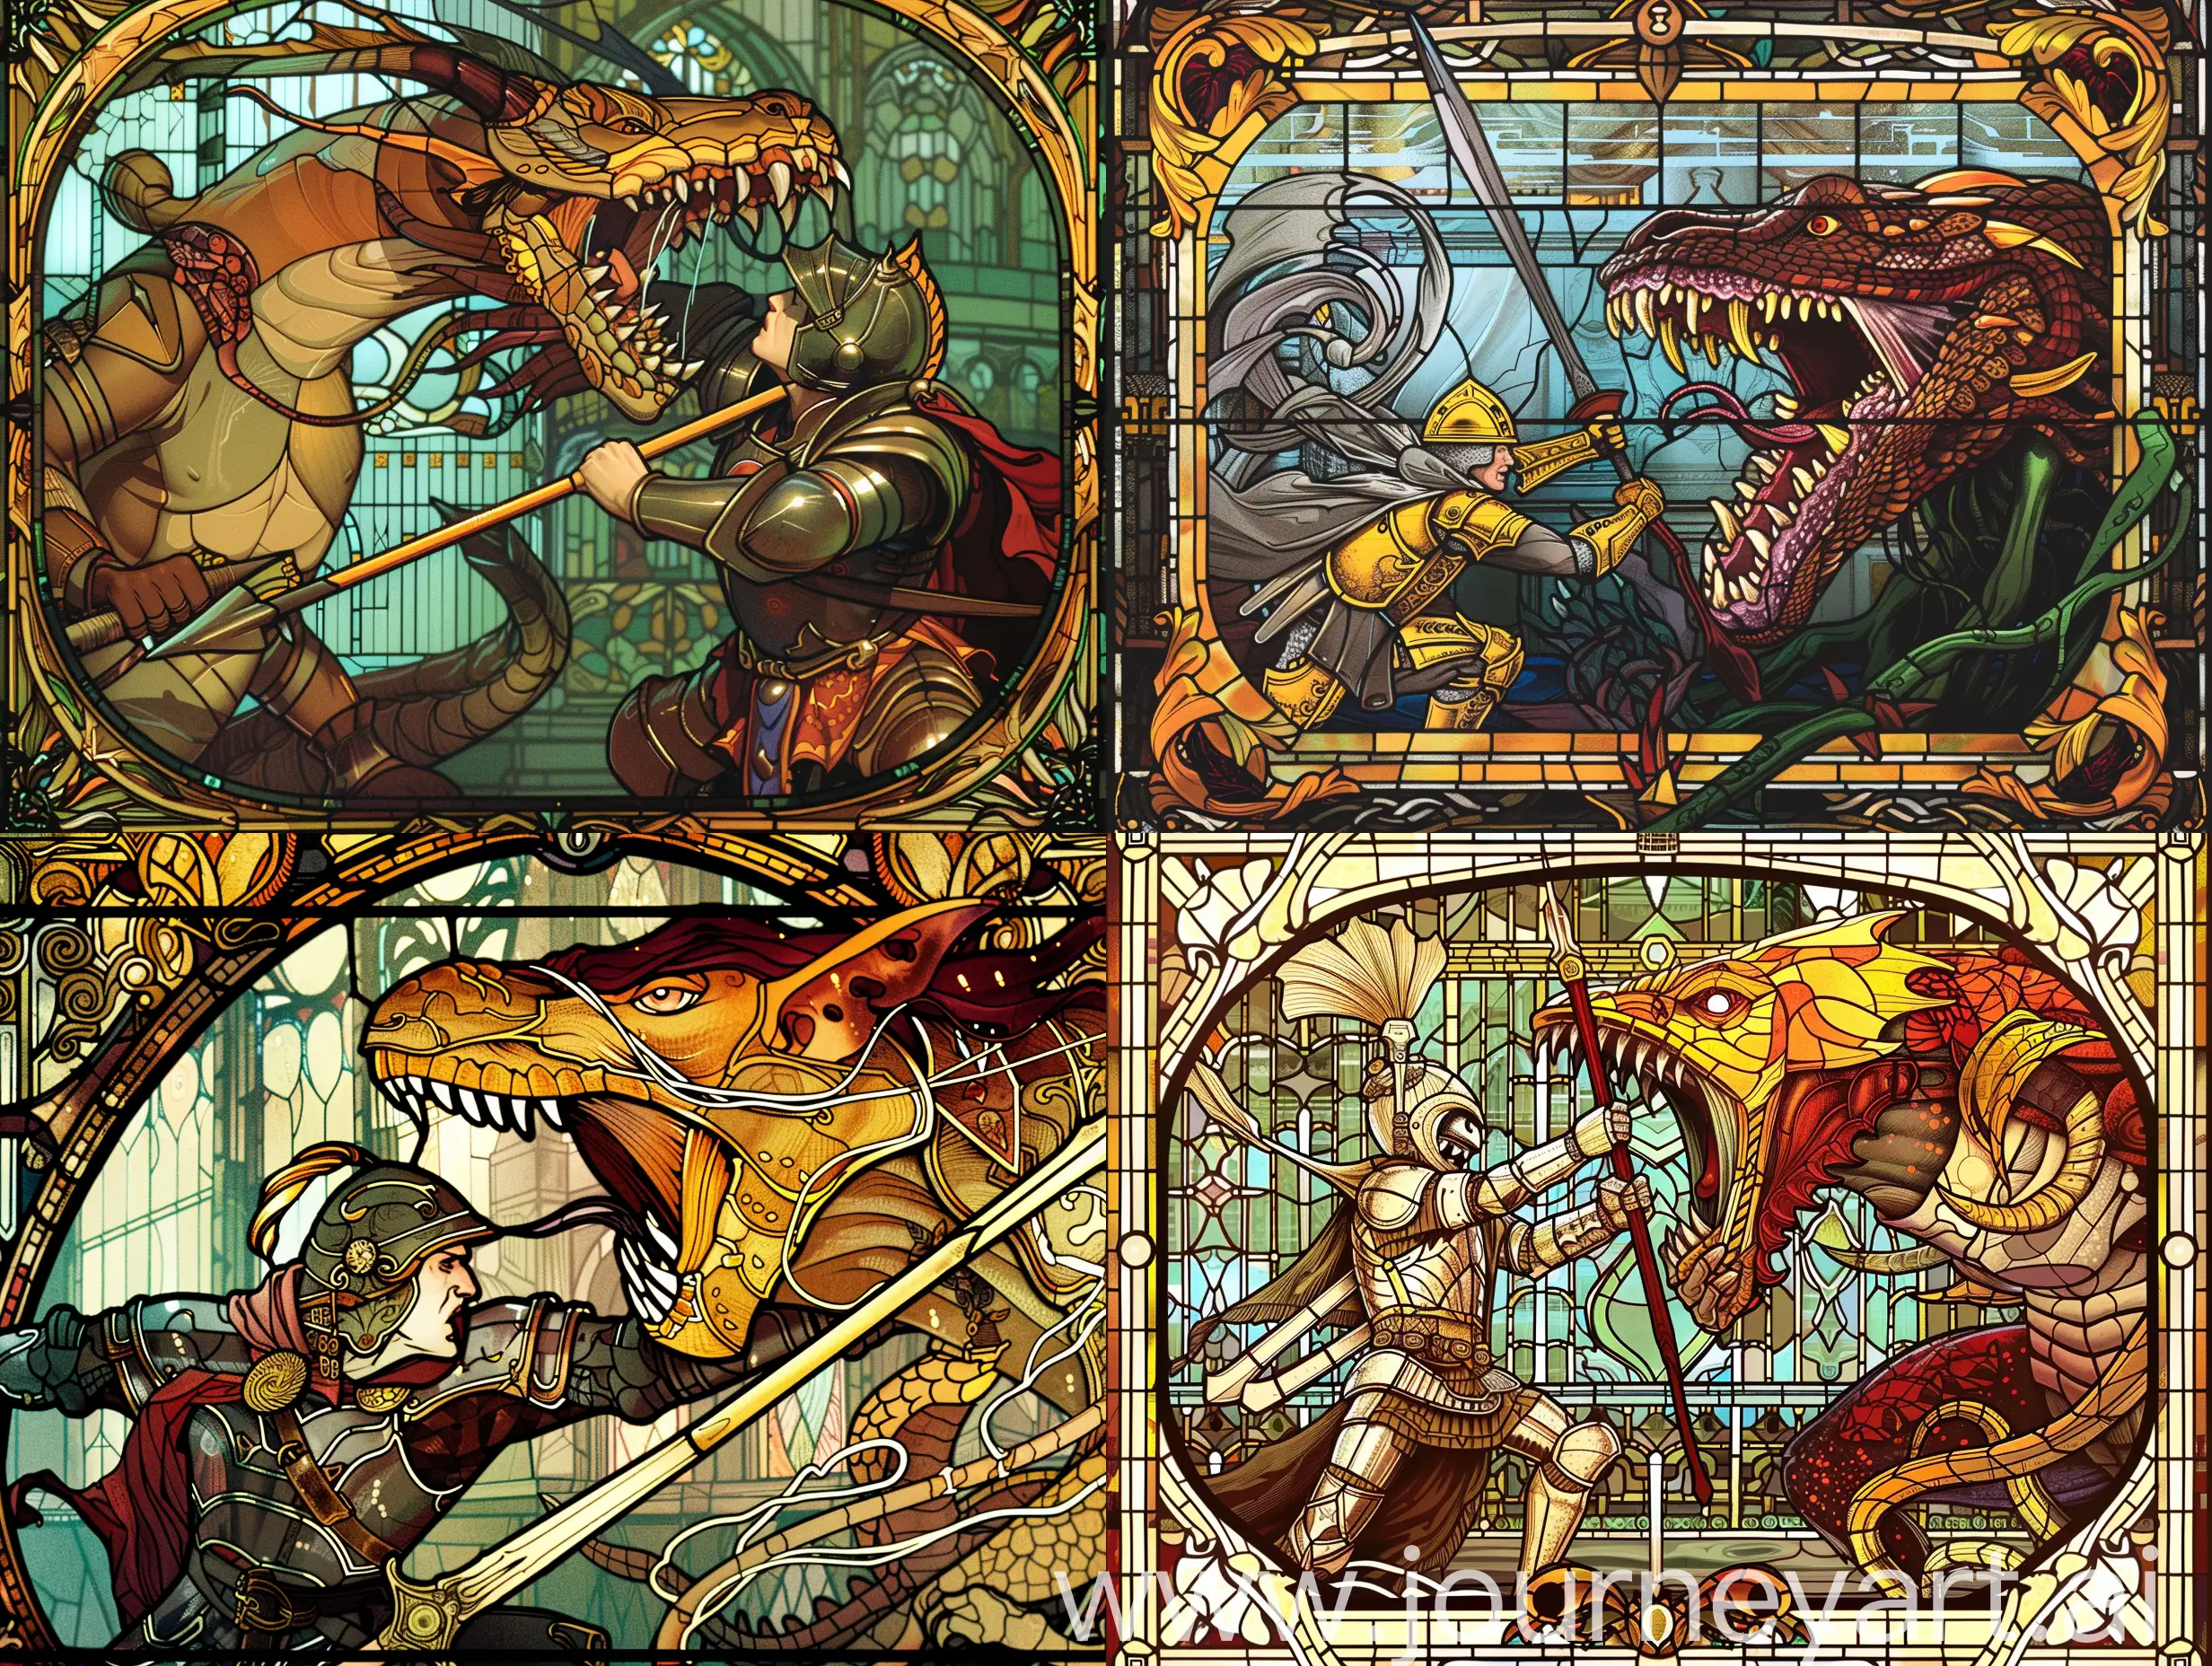 Epic-Battle-Warrior-Confronts-Monstrous-Serpent-in-Art-Nouveau-Stained-Glass